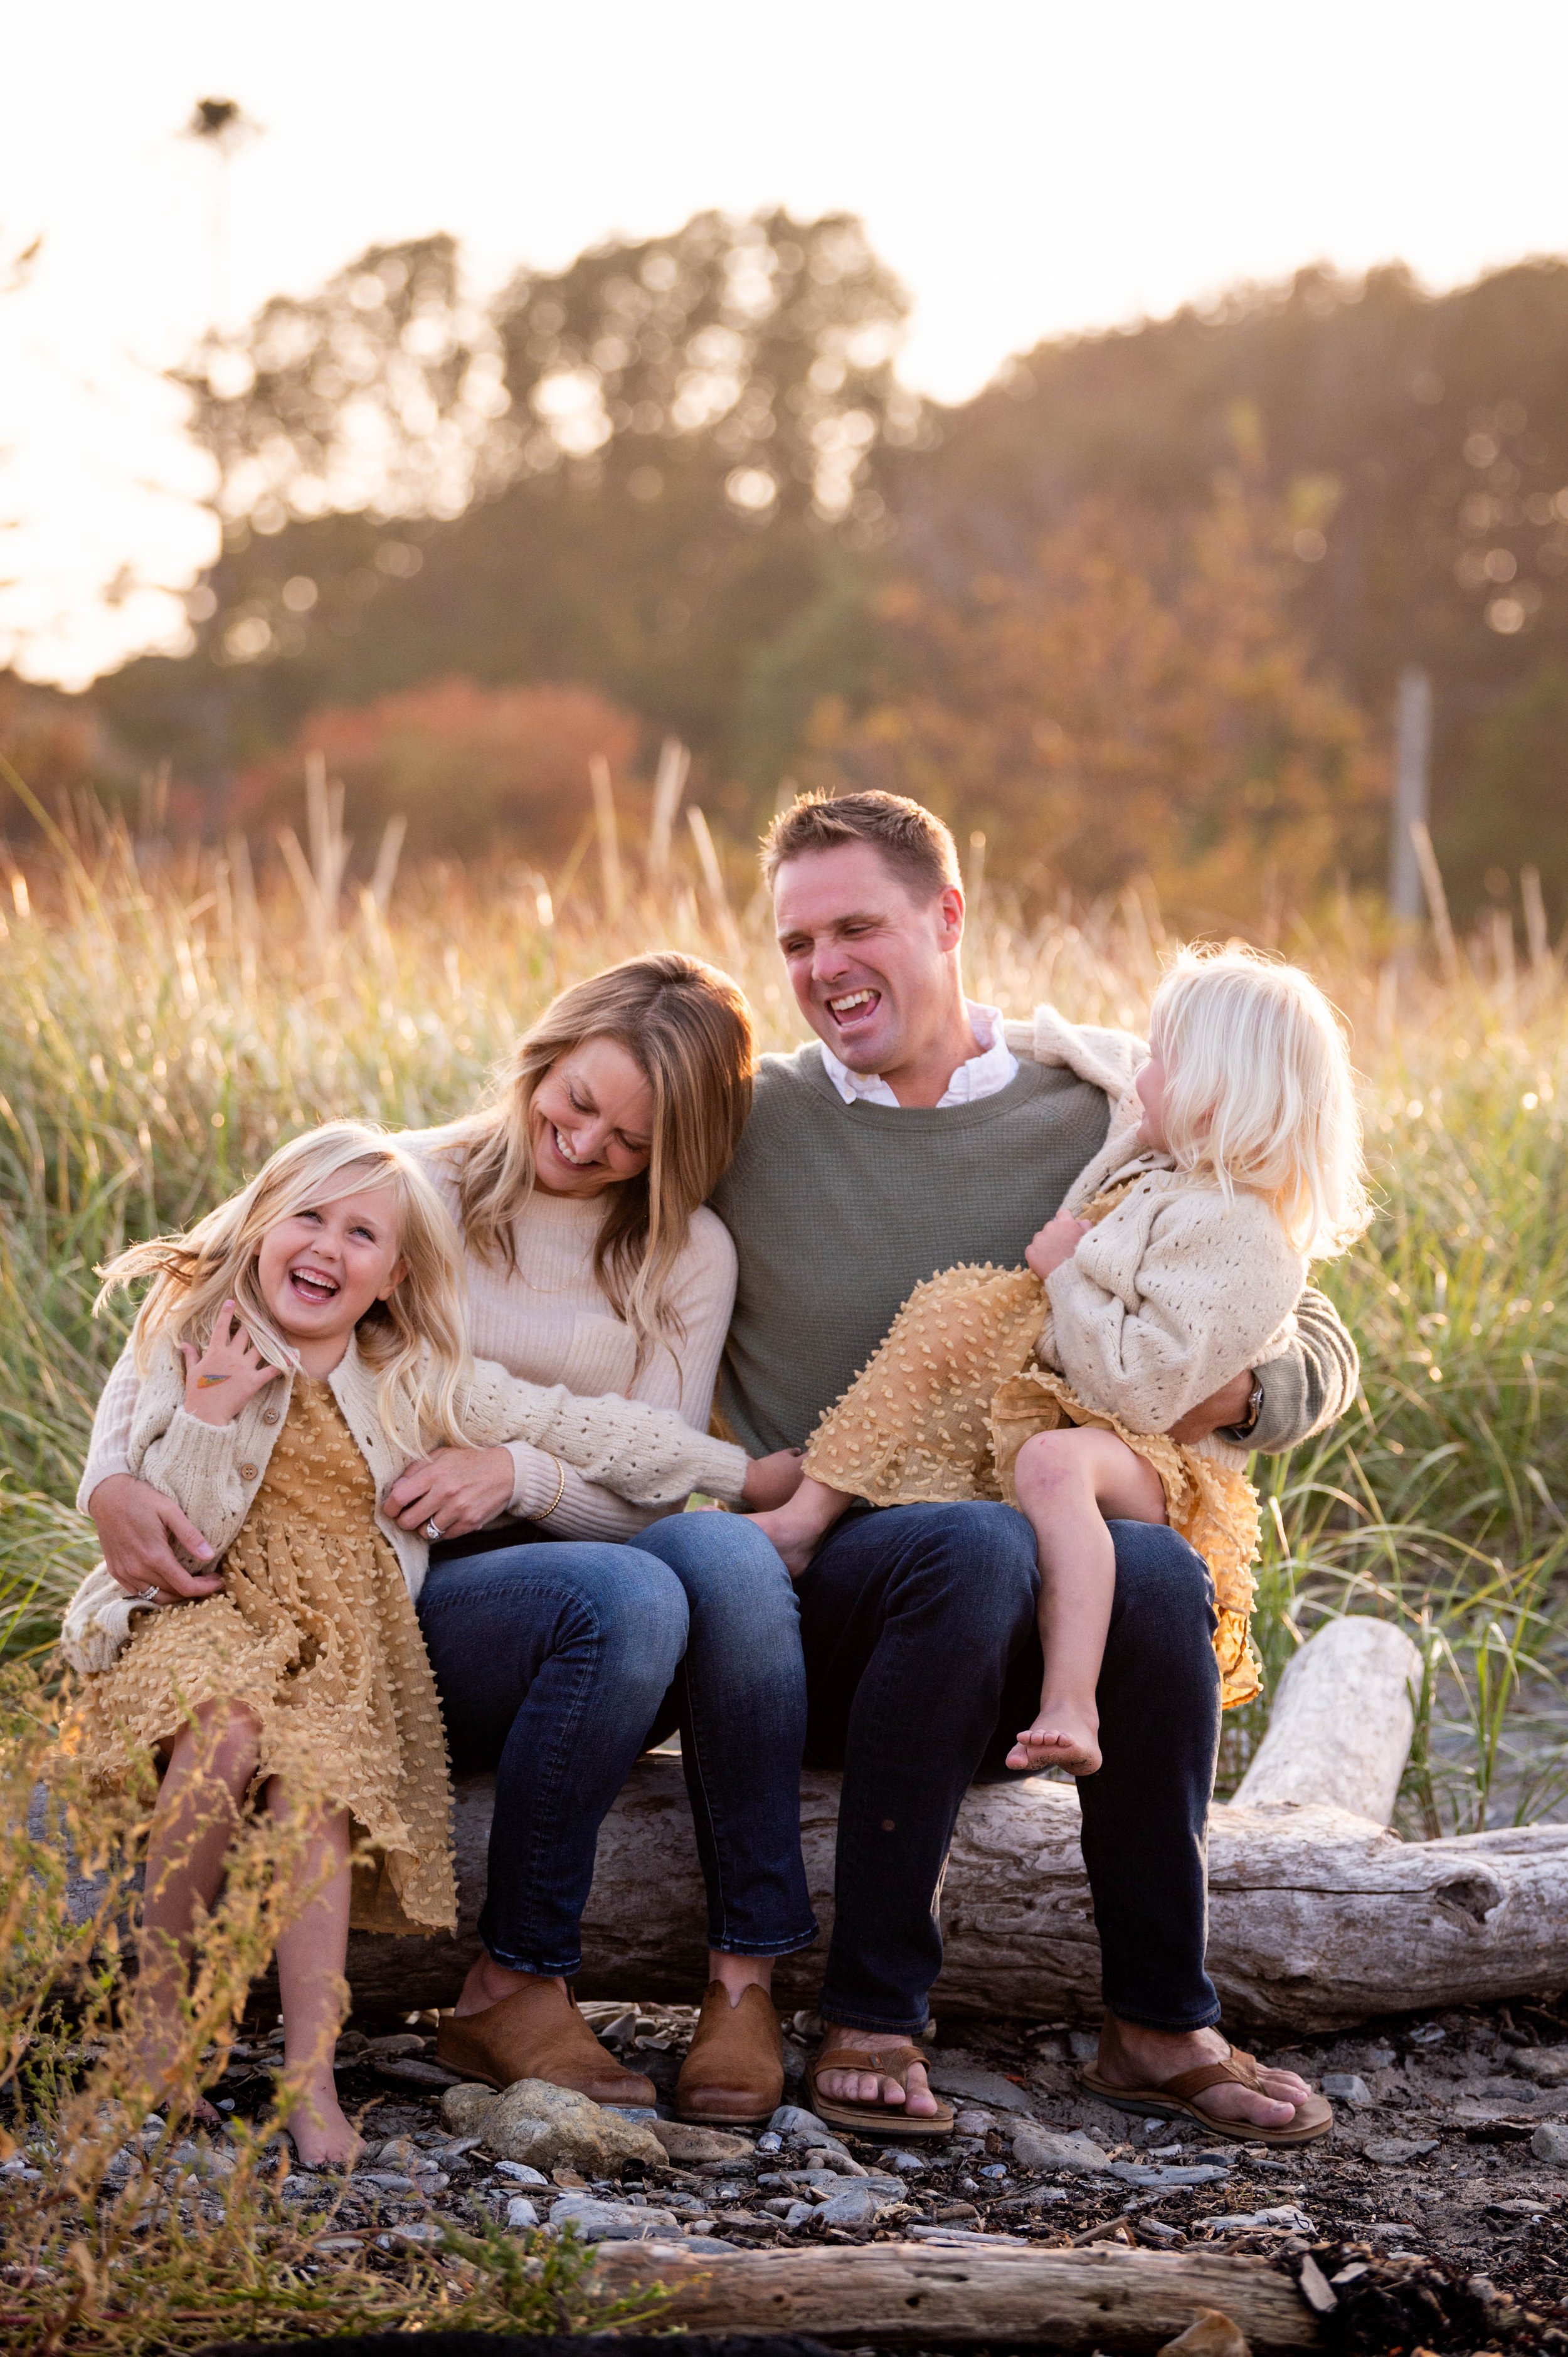 lindsay murphy photography | portland maine family photographer | cape elizabeth golden hour family laughing.jpg